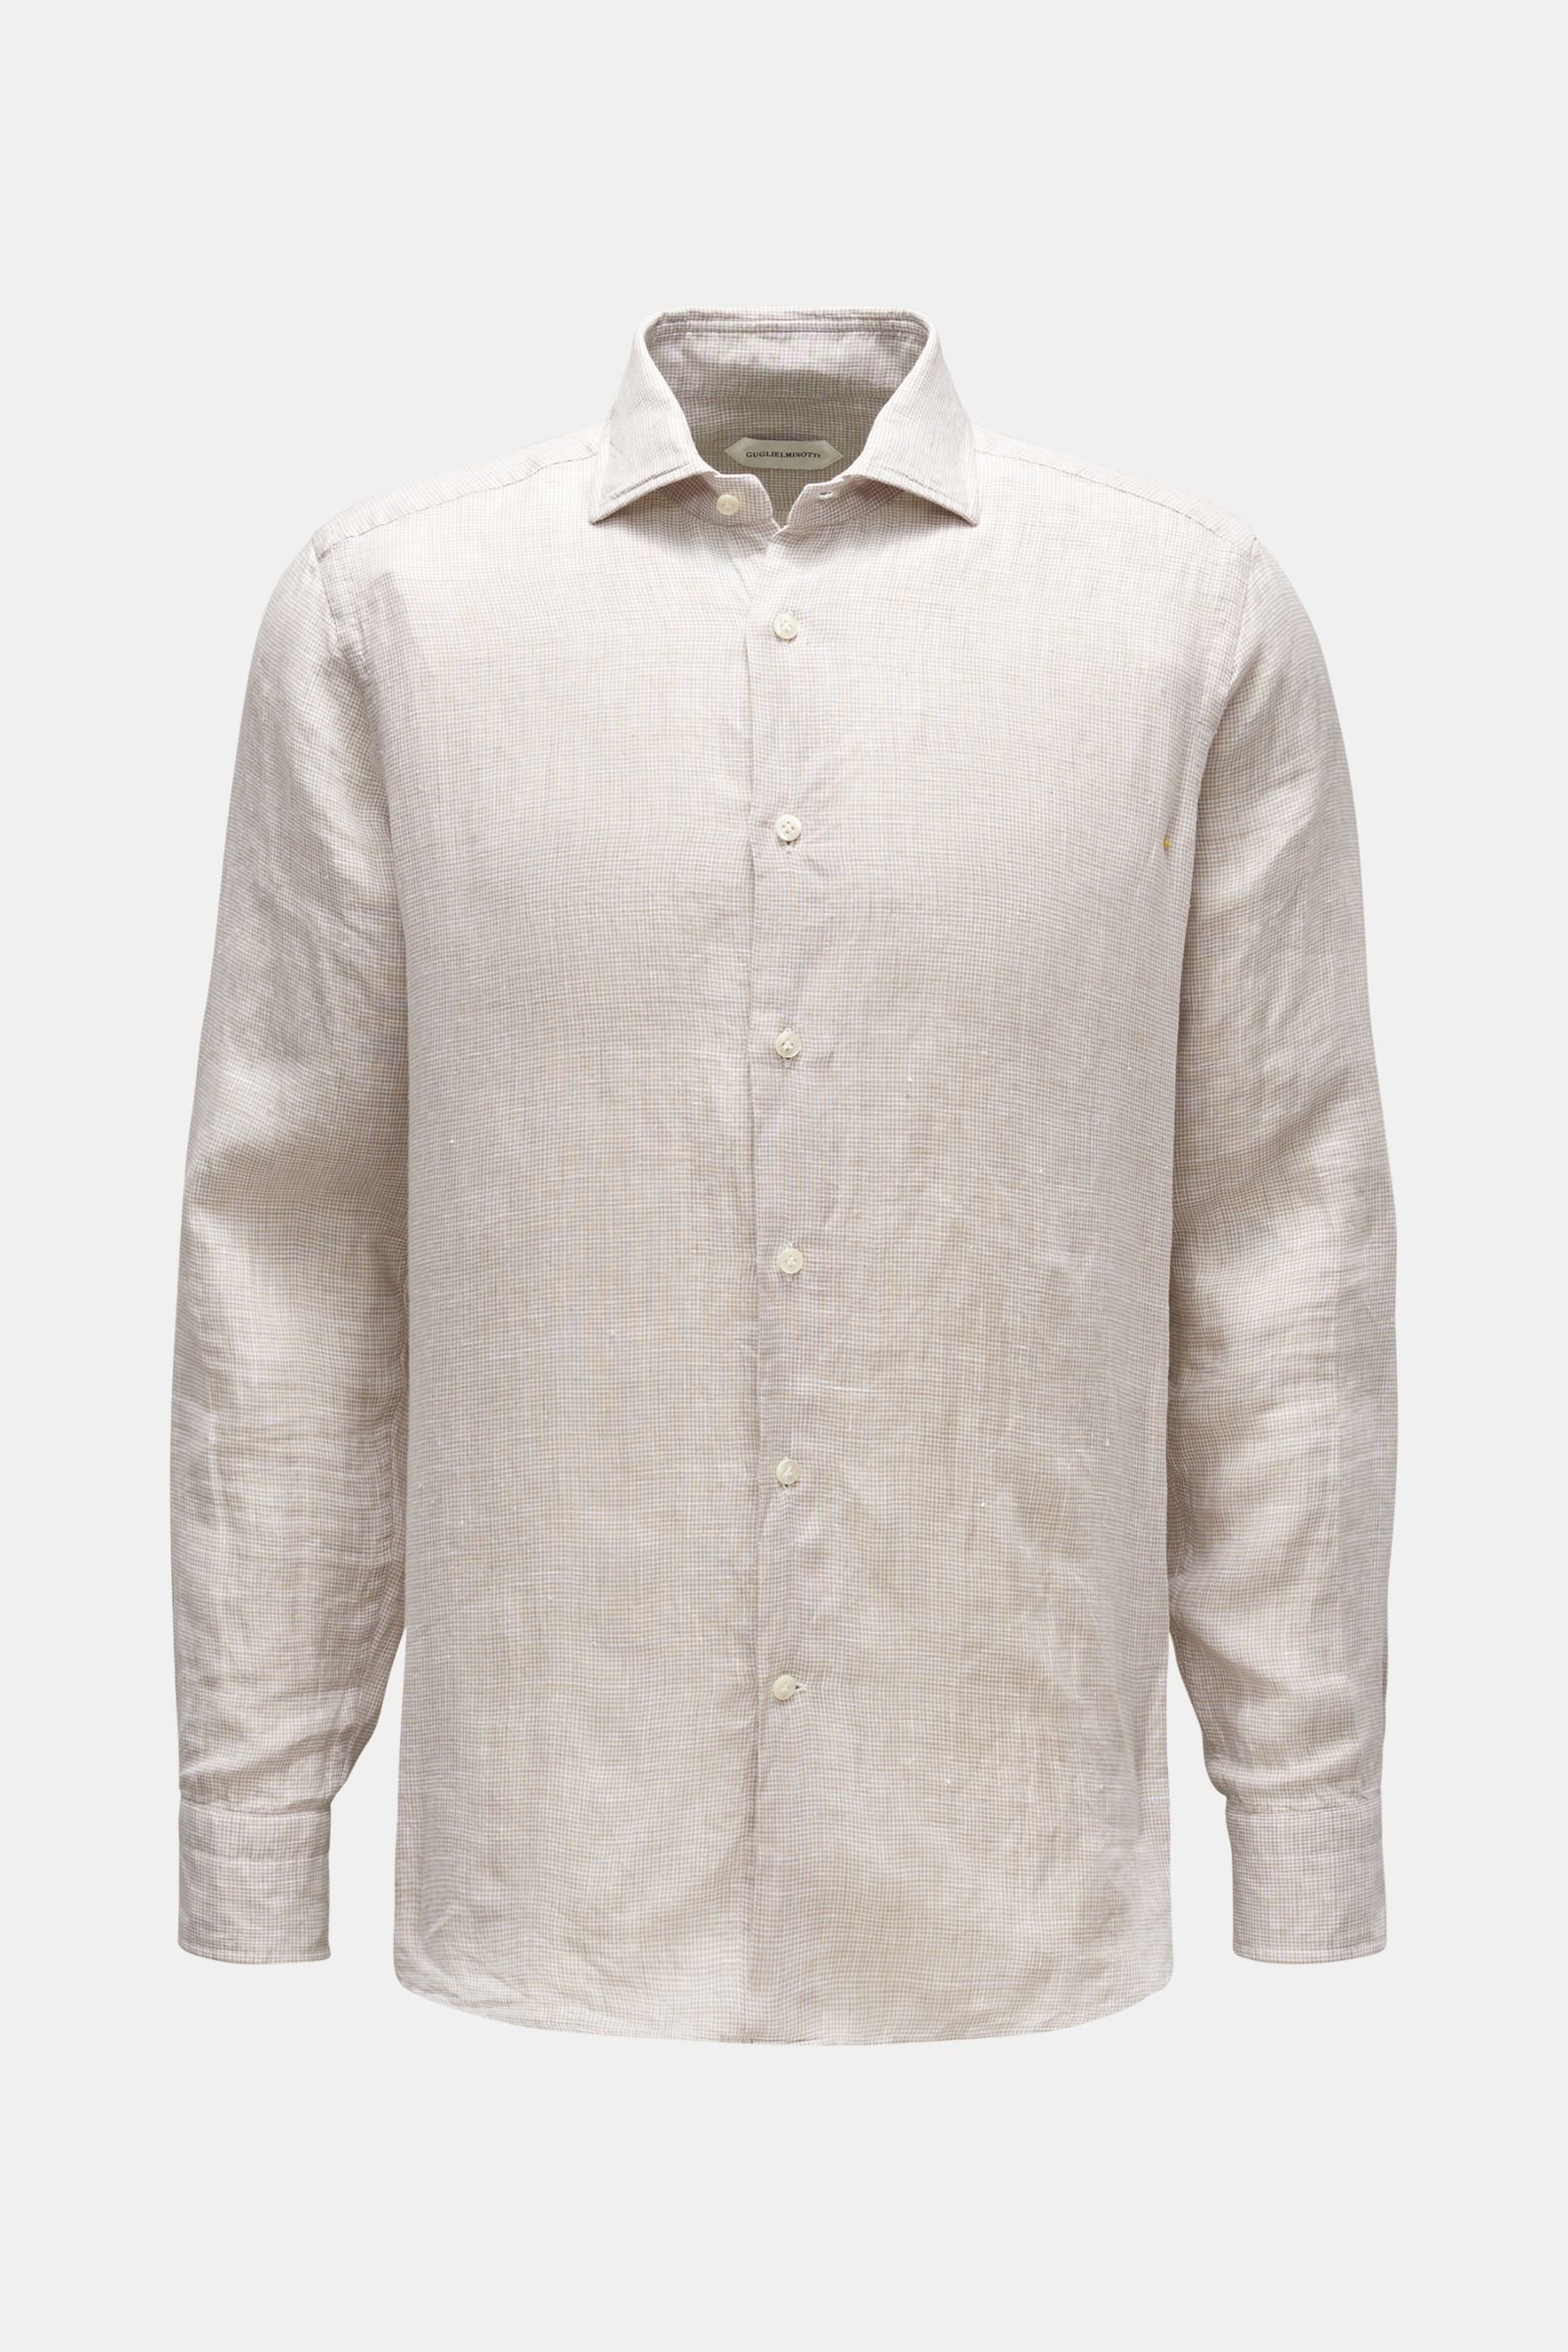 Linen shirt shark collar beige/white checked